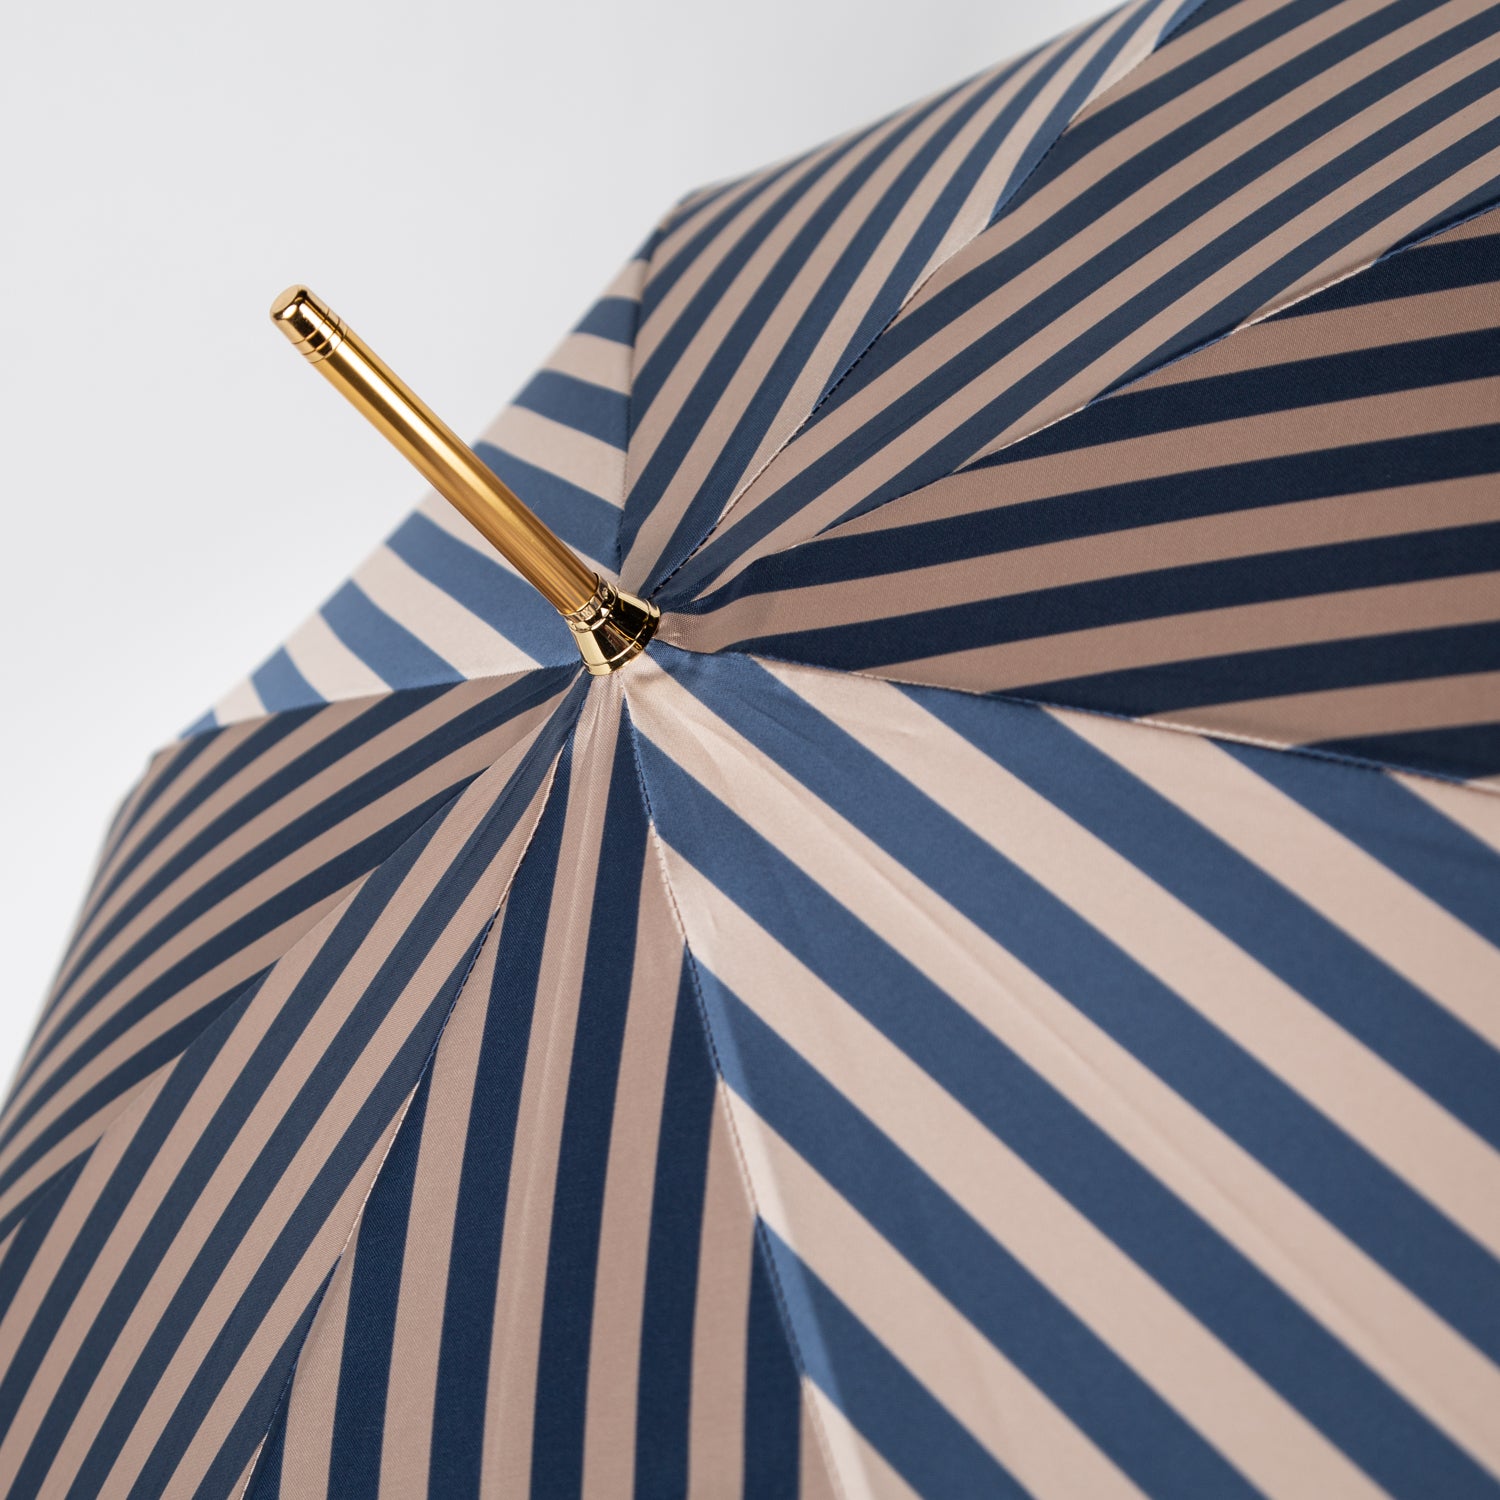 striped blue umbrella with malacca wood handle